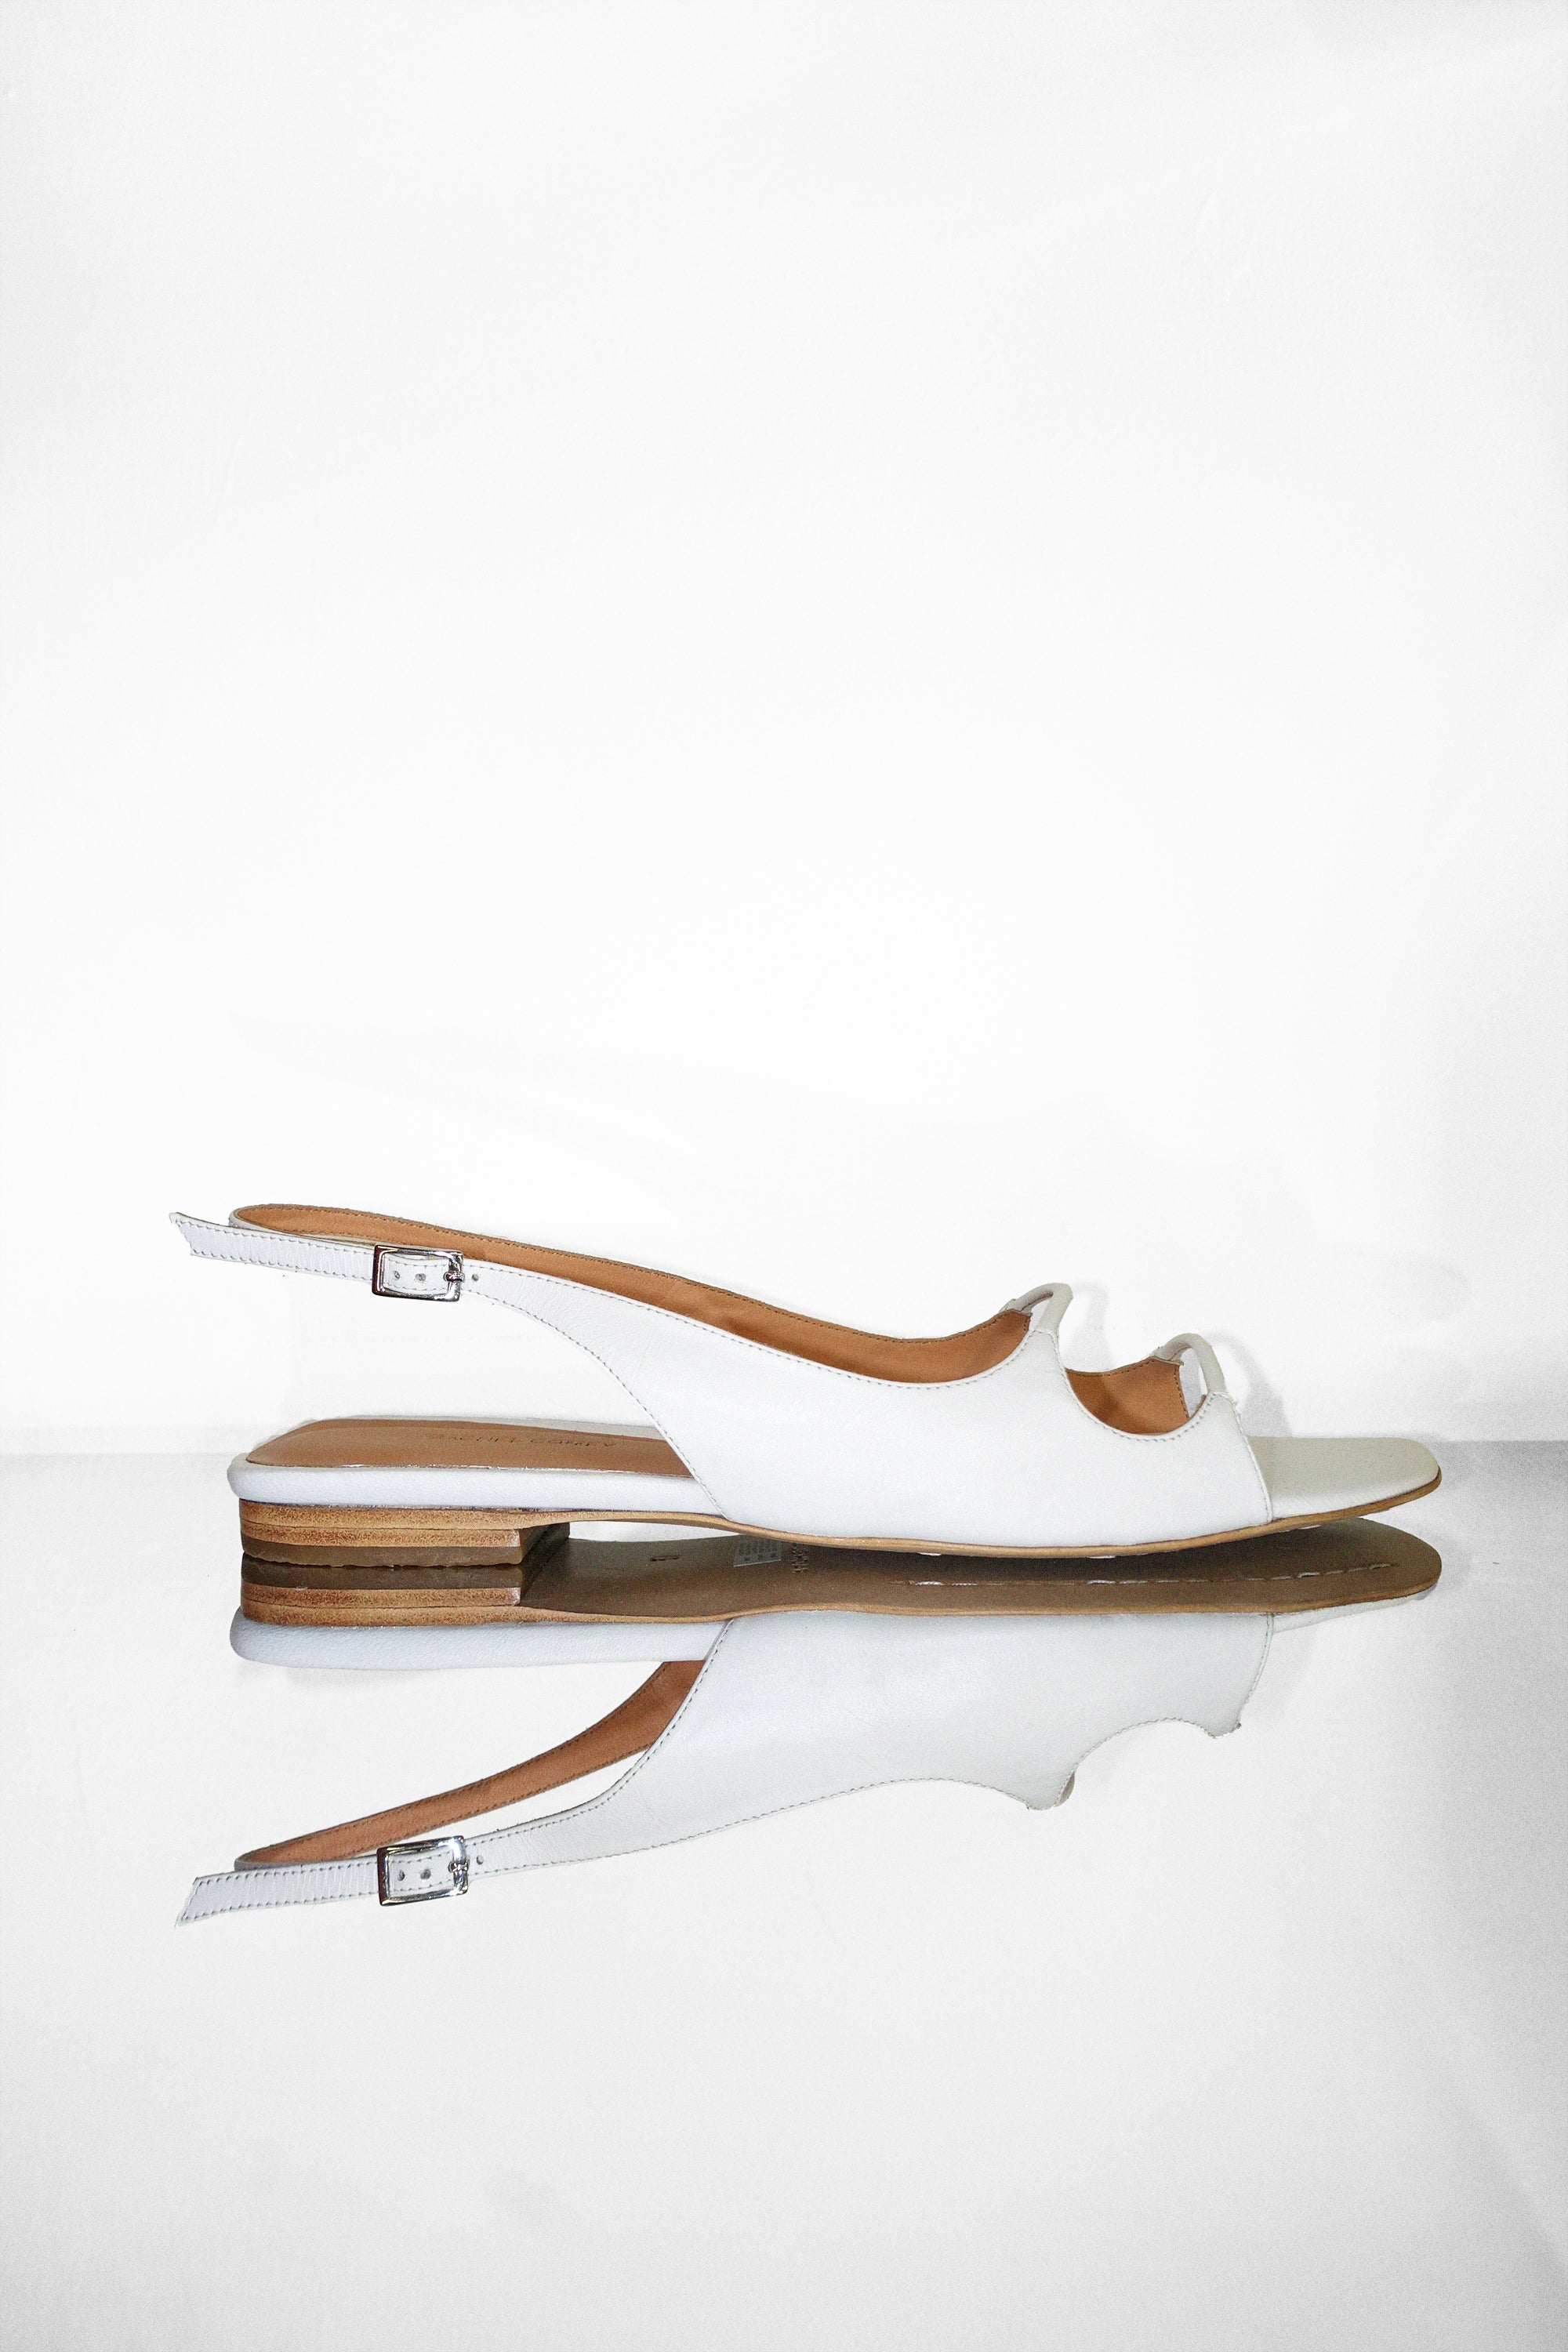 Veluza Sandal in White by Rachel Comey